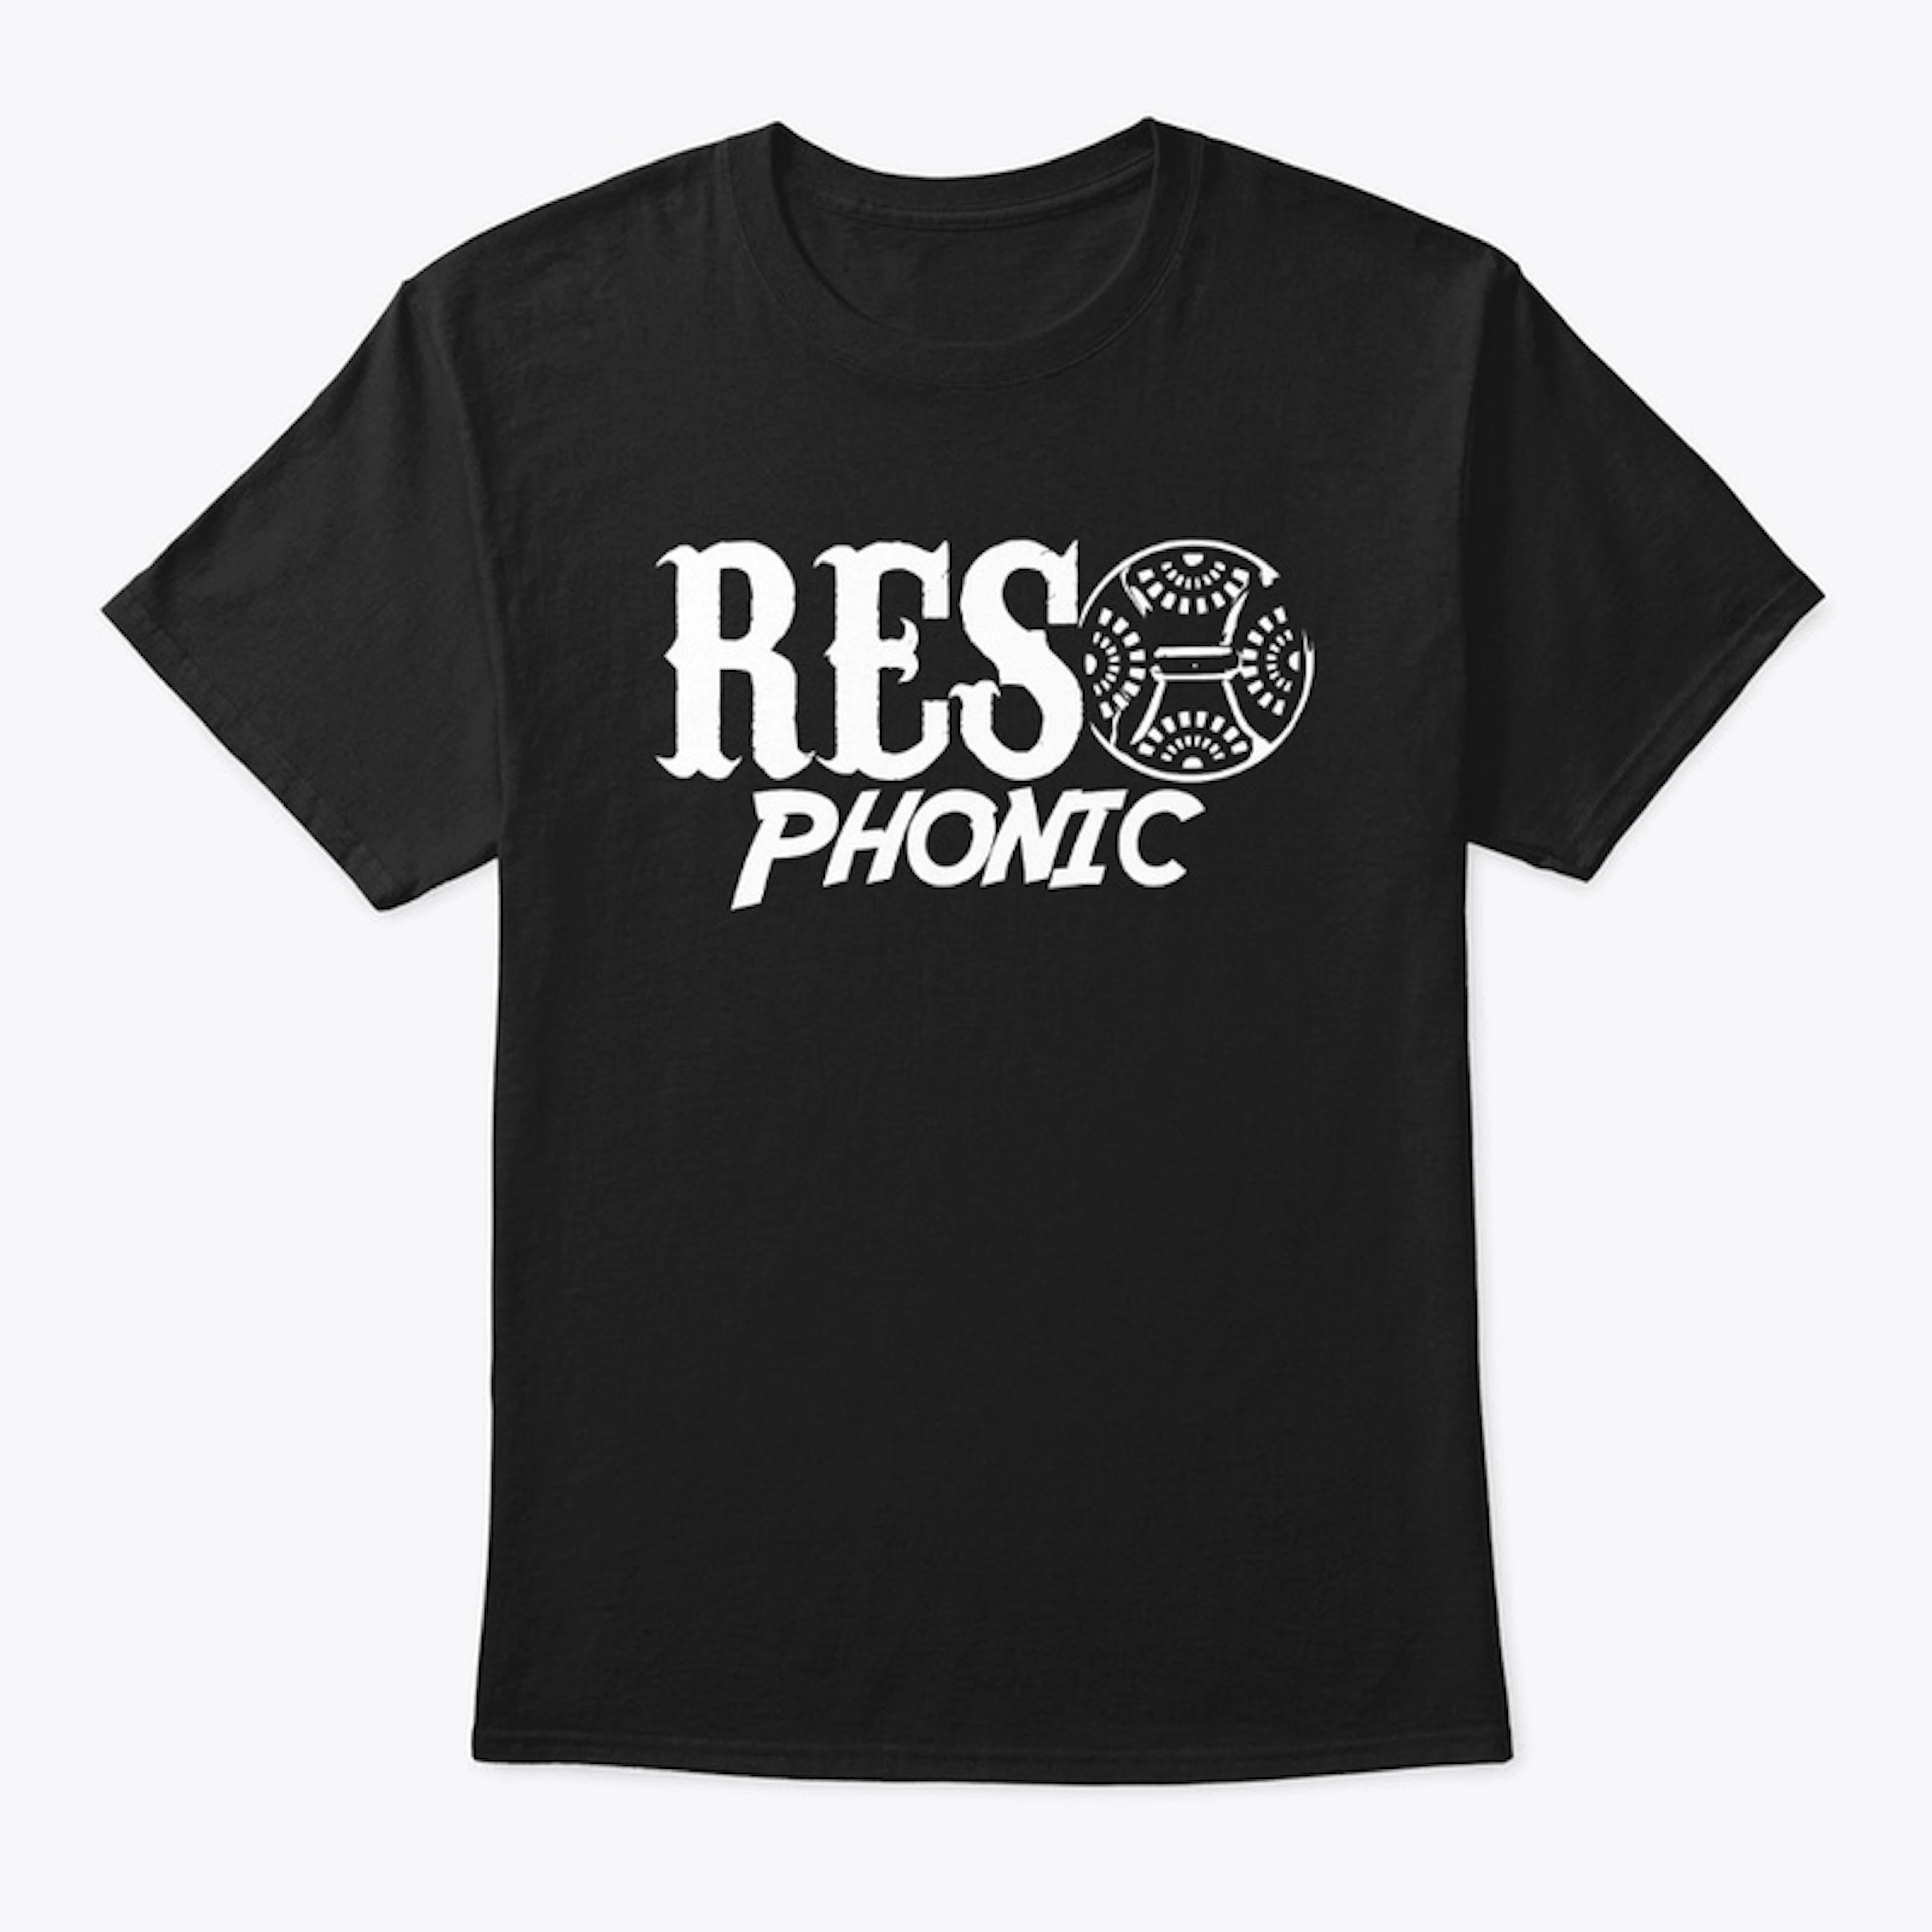 Reso-Phonic - White Text